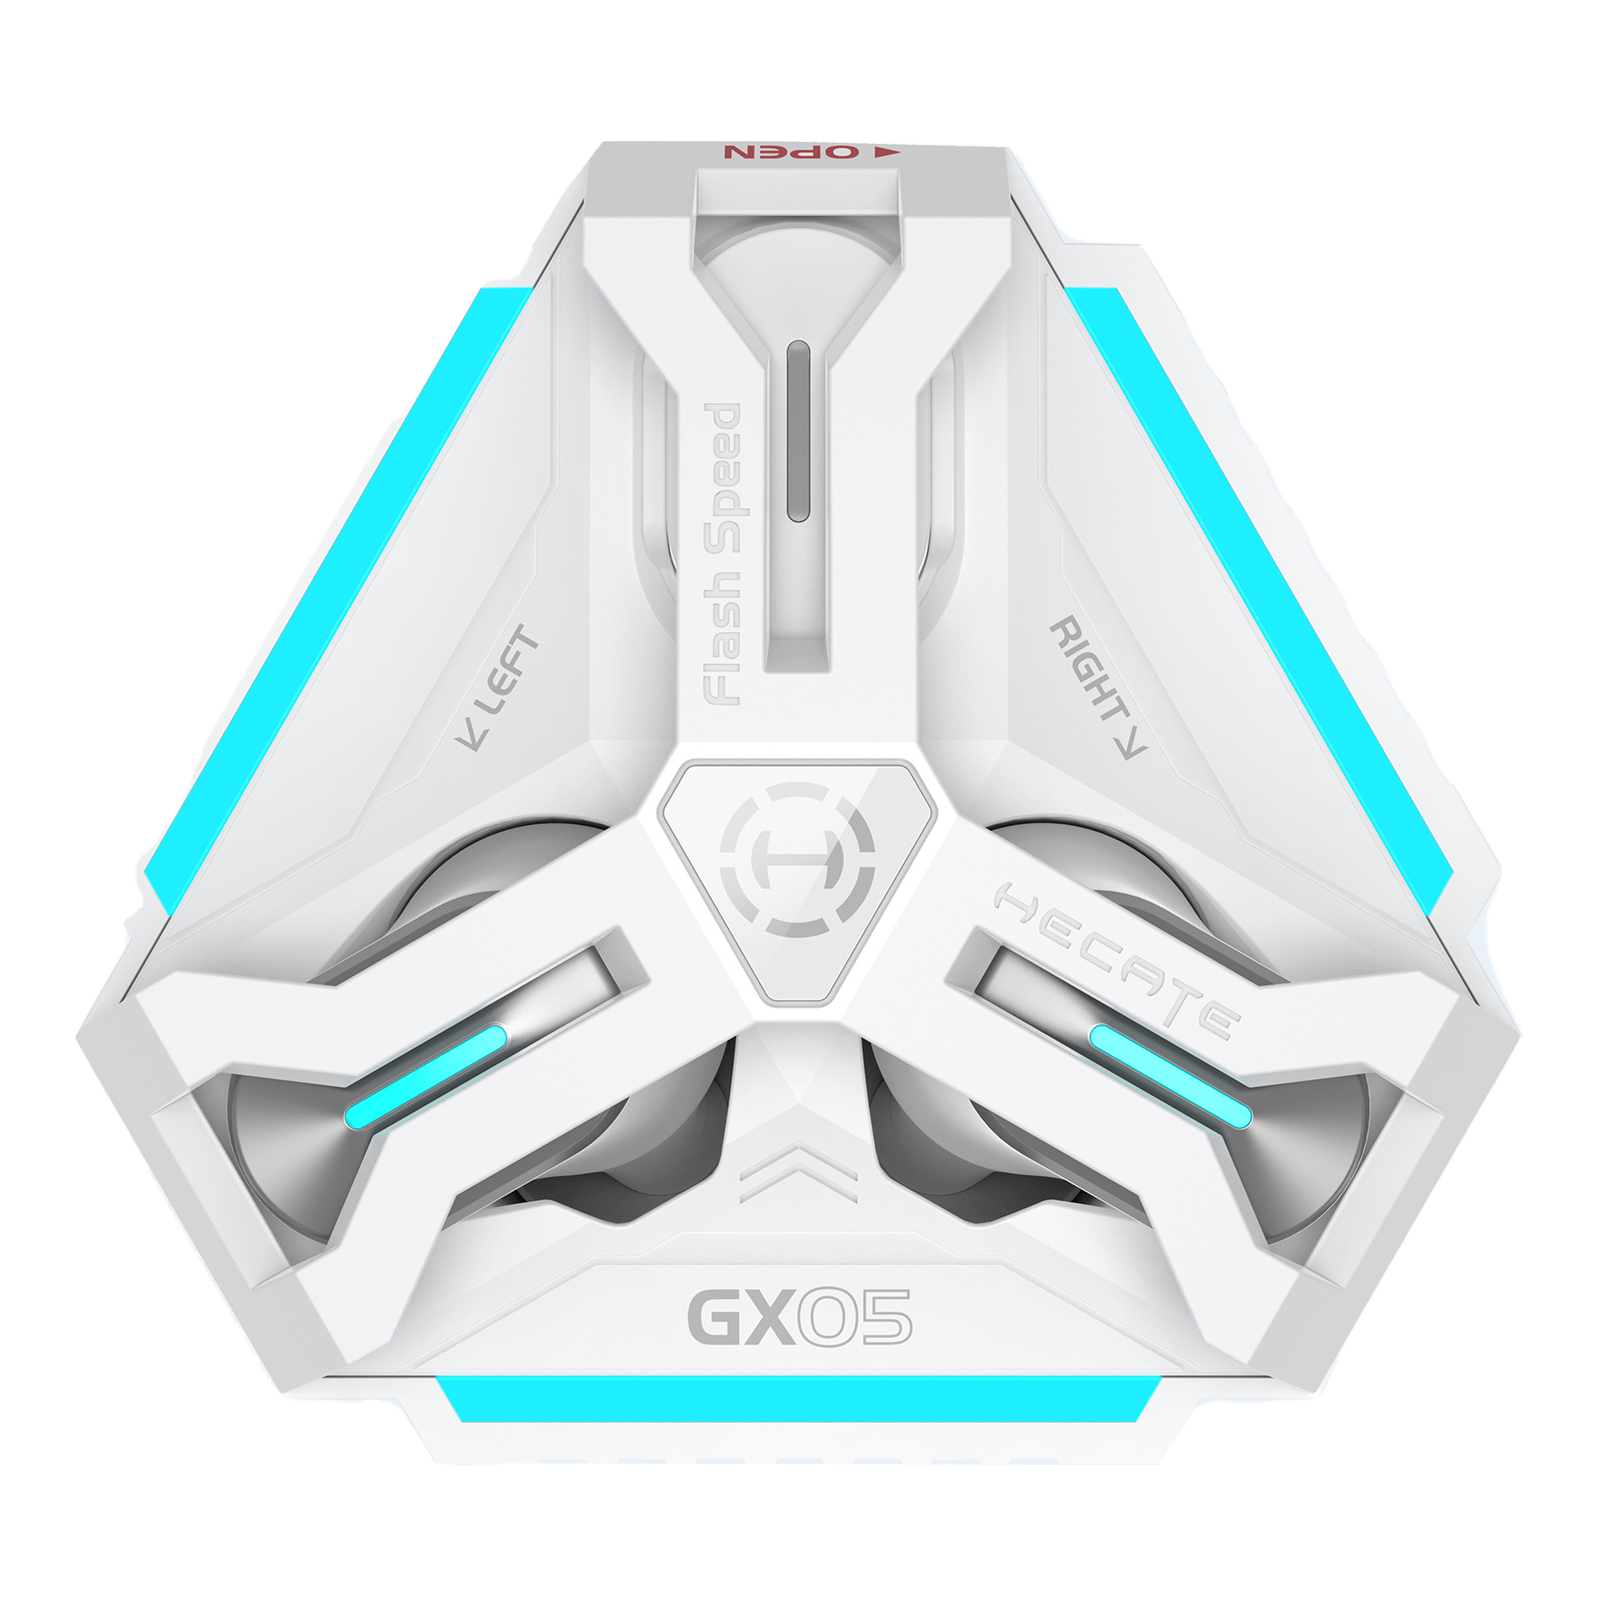 GX05 Ultra-Low Latency Wireless Gaming Earbuds